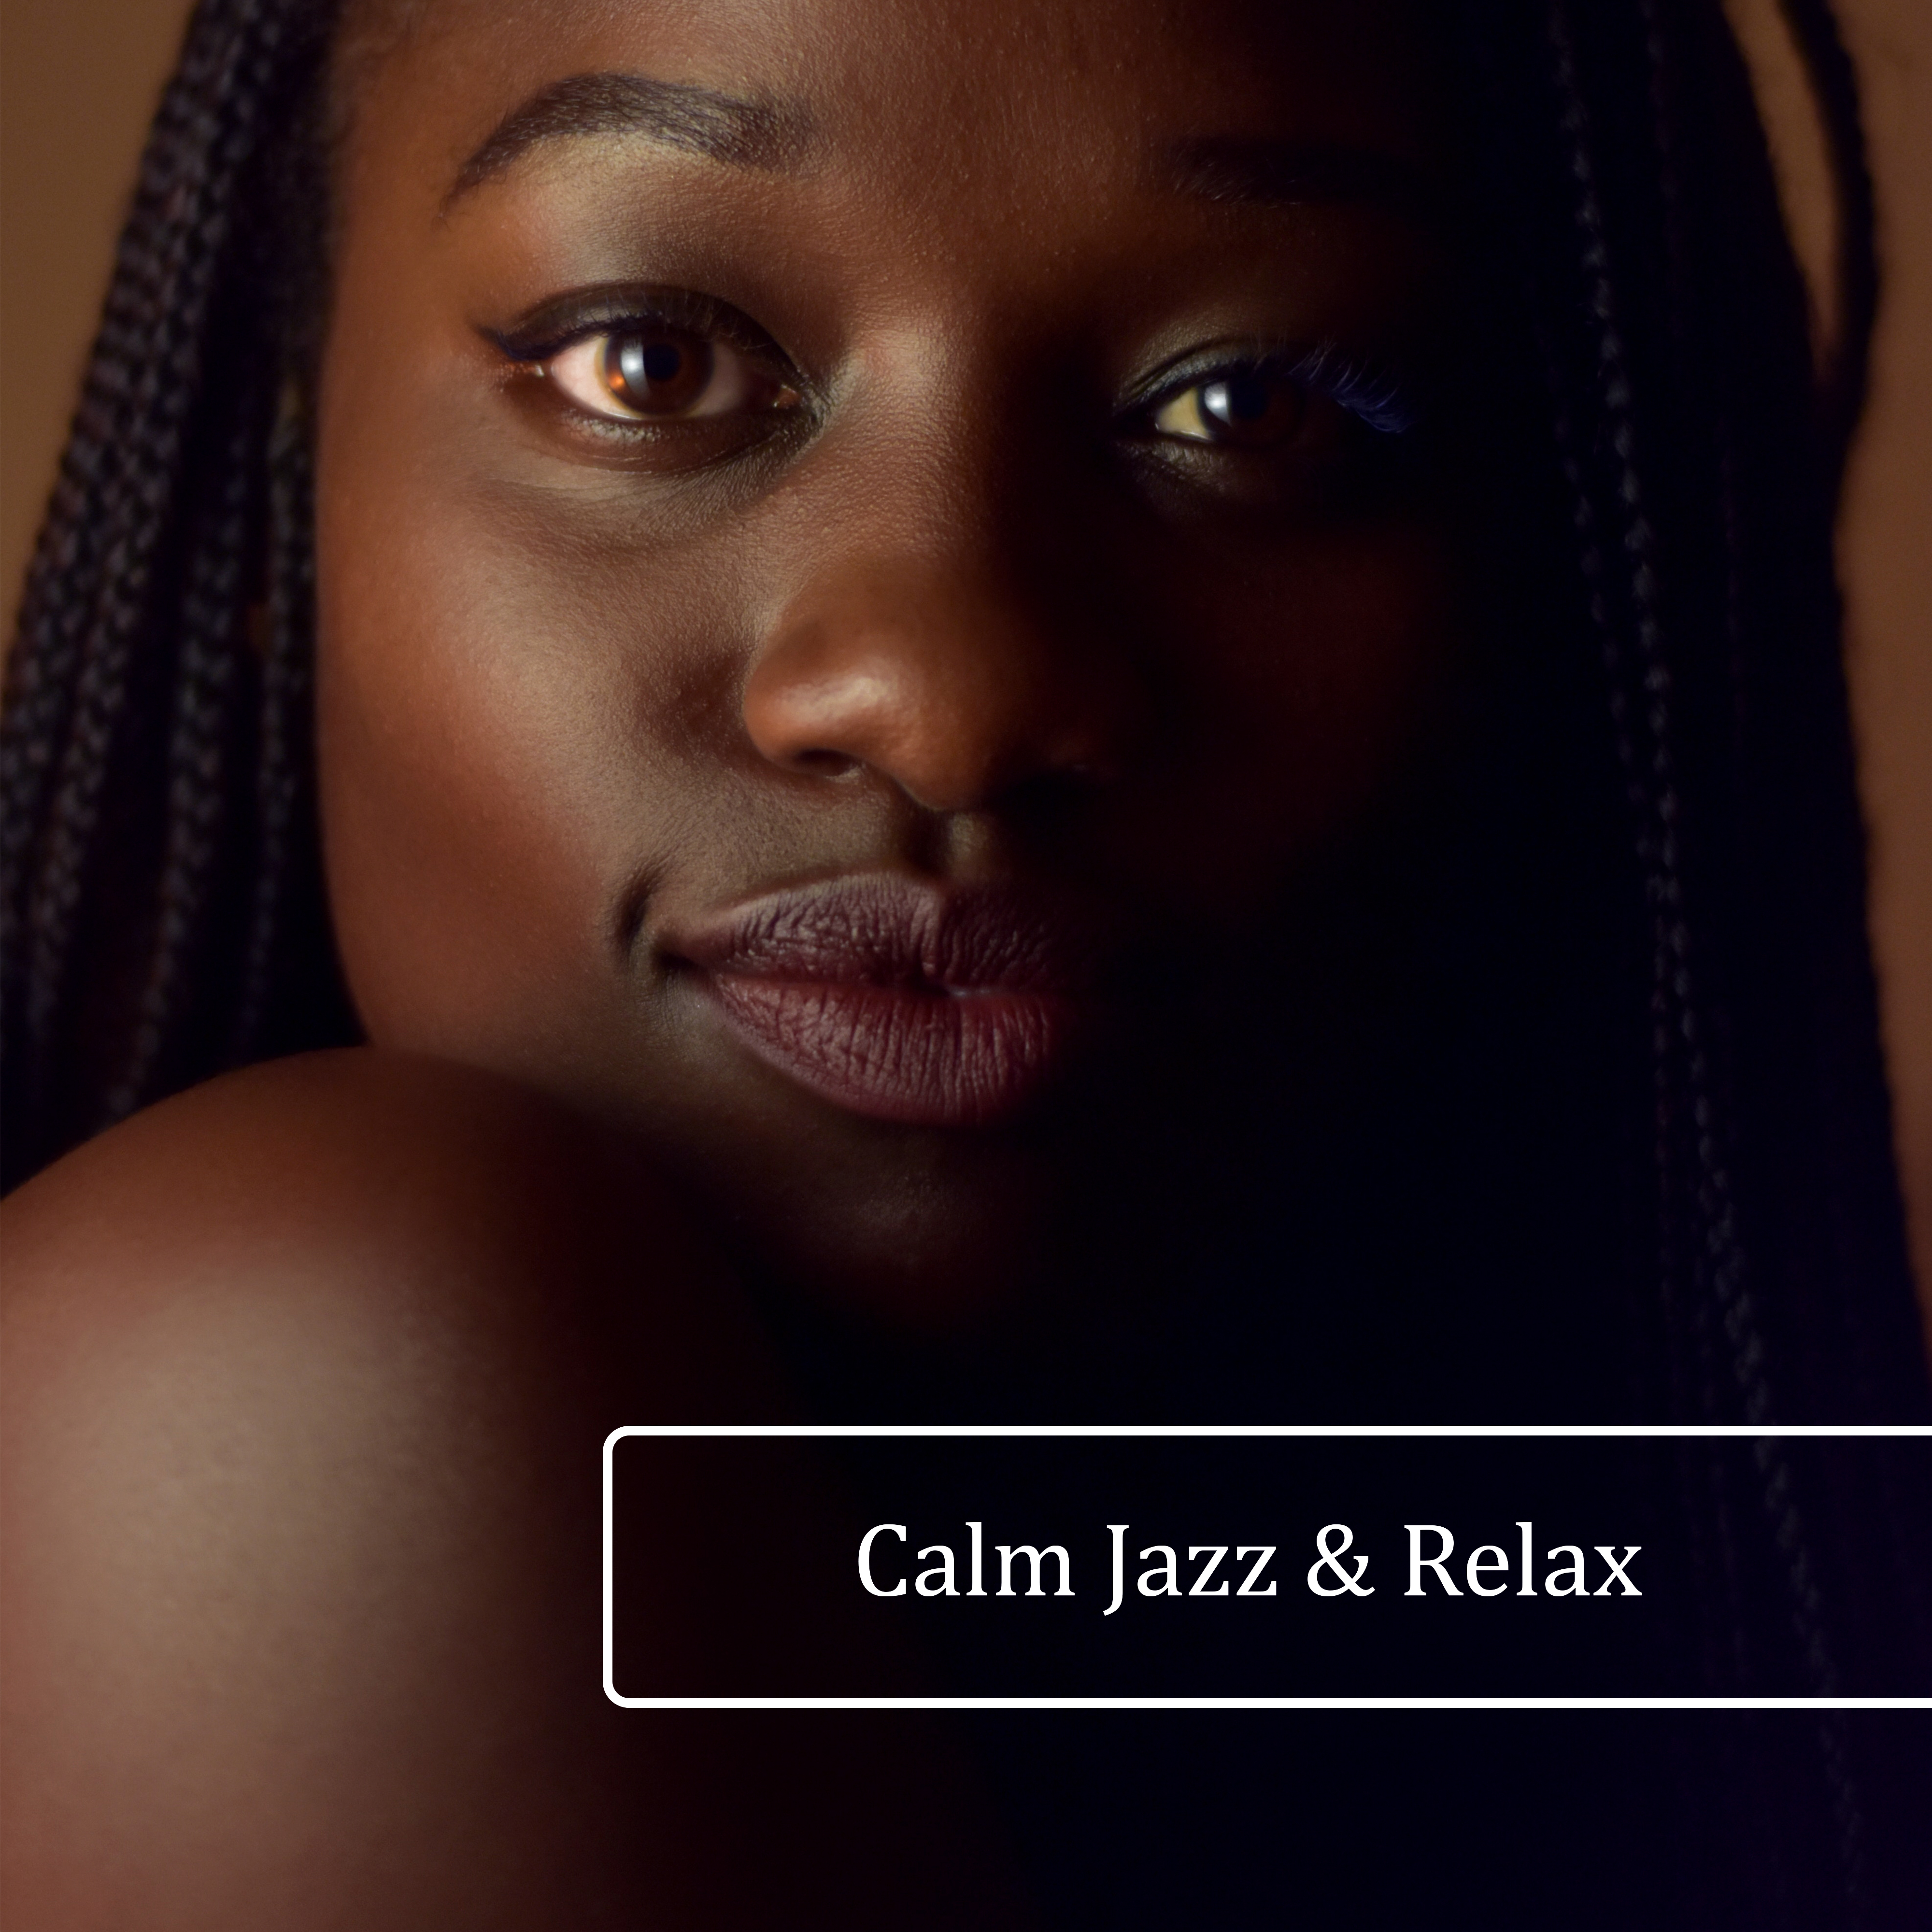 Calm Jazz & Relax